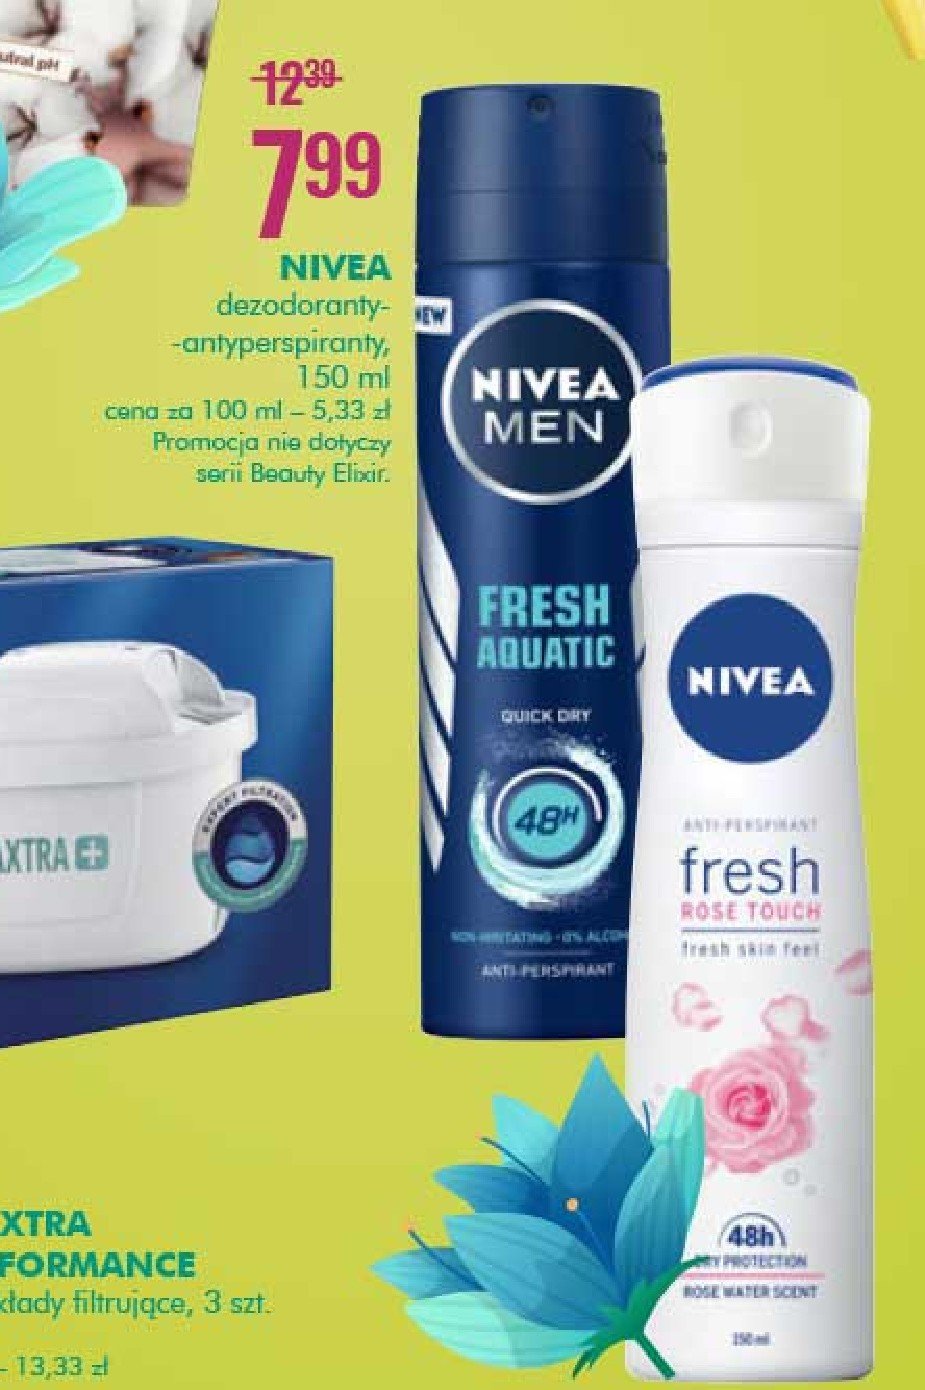 Dezodorant Nivea powder touch promocja